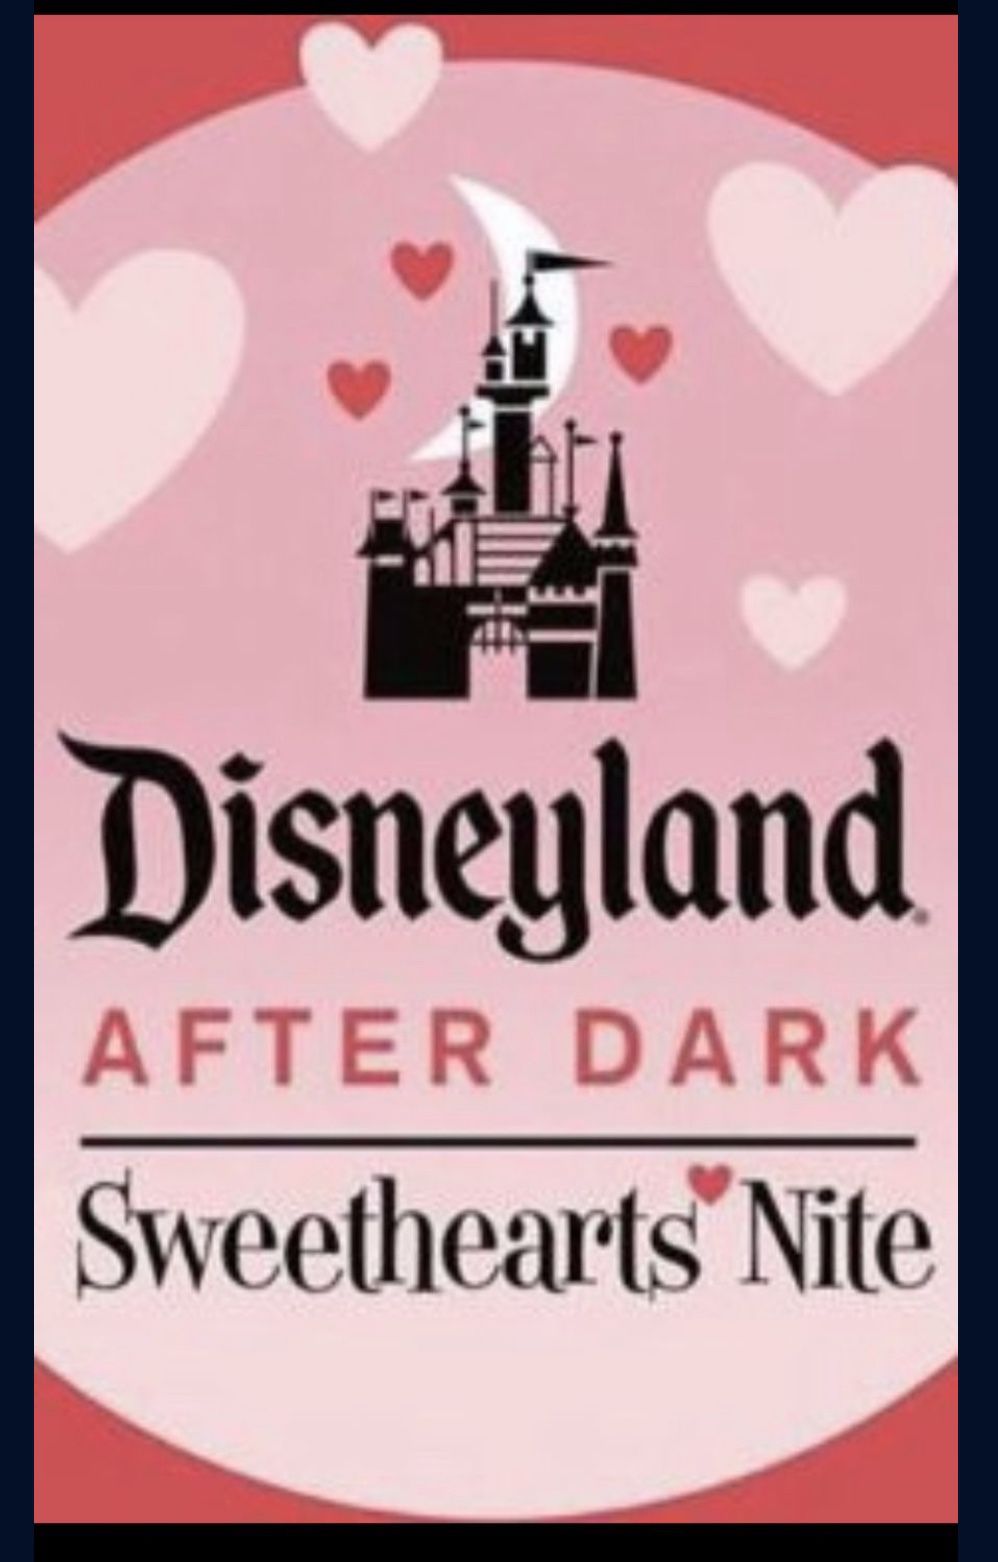 Disneyland Sweethearts Night Tickets